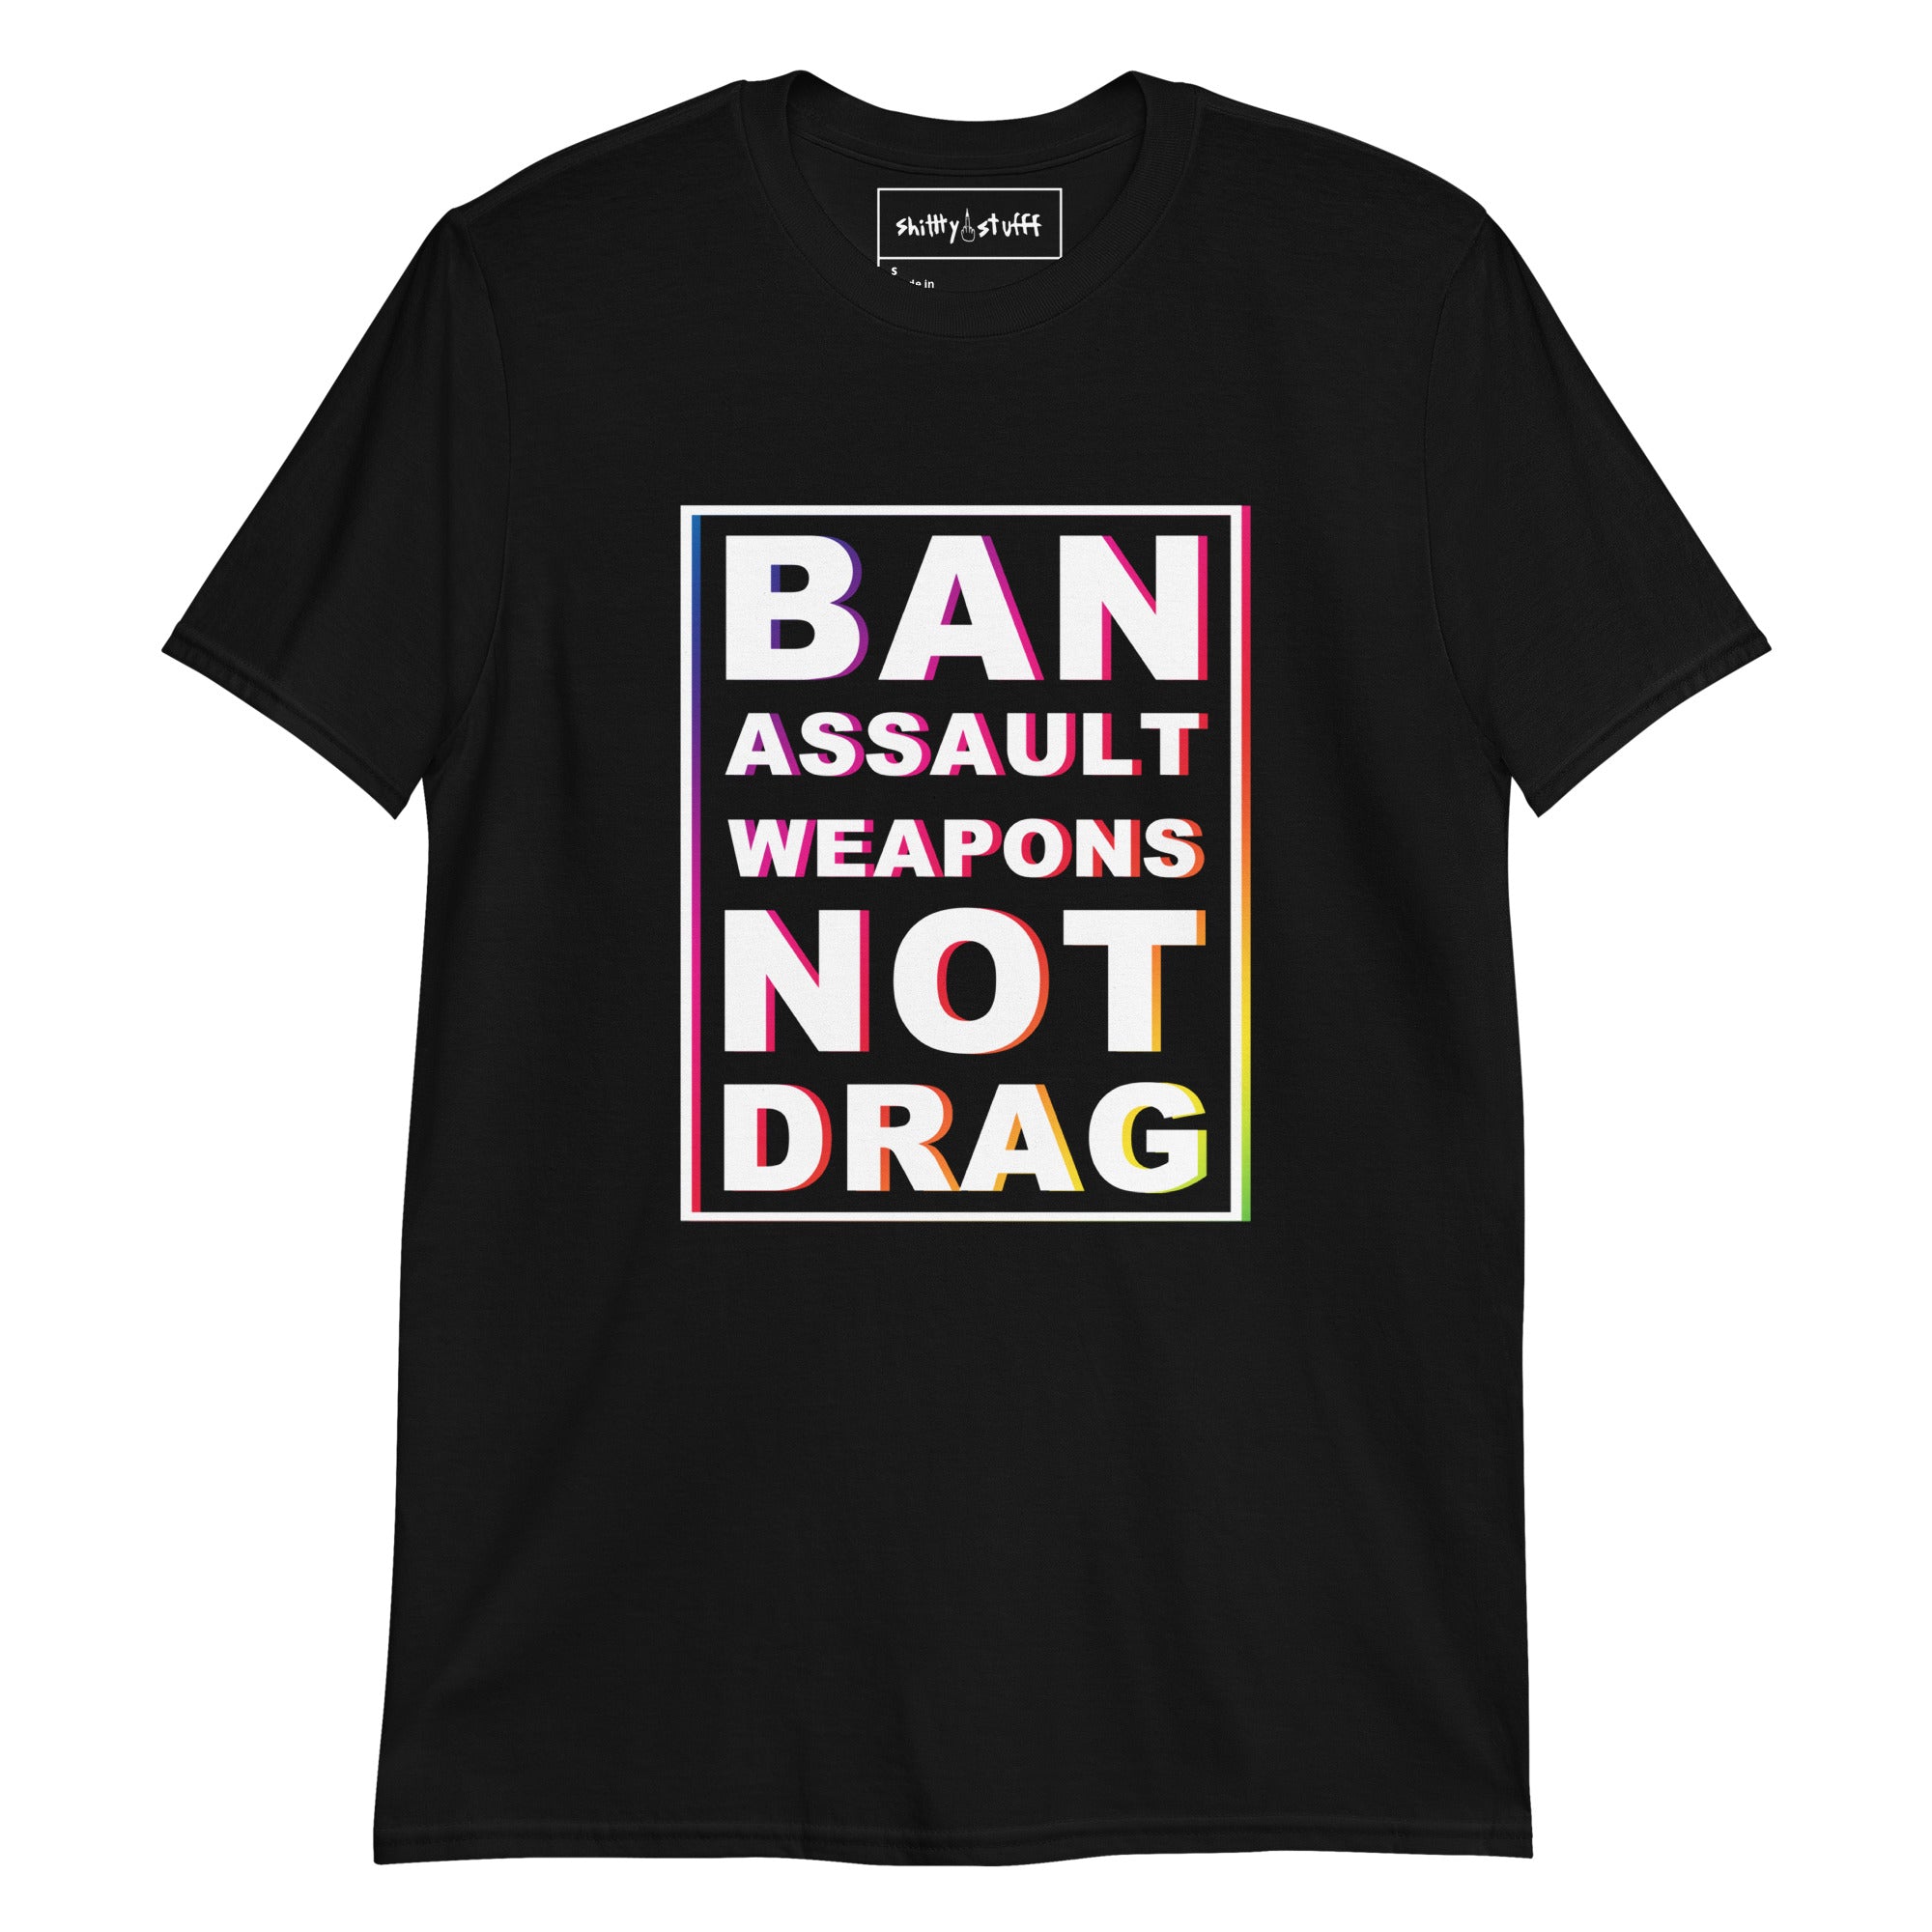 Not Drag Shirt